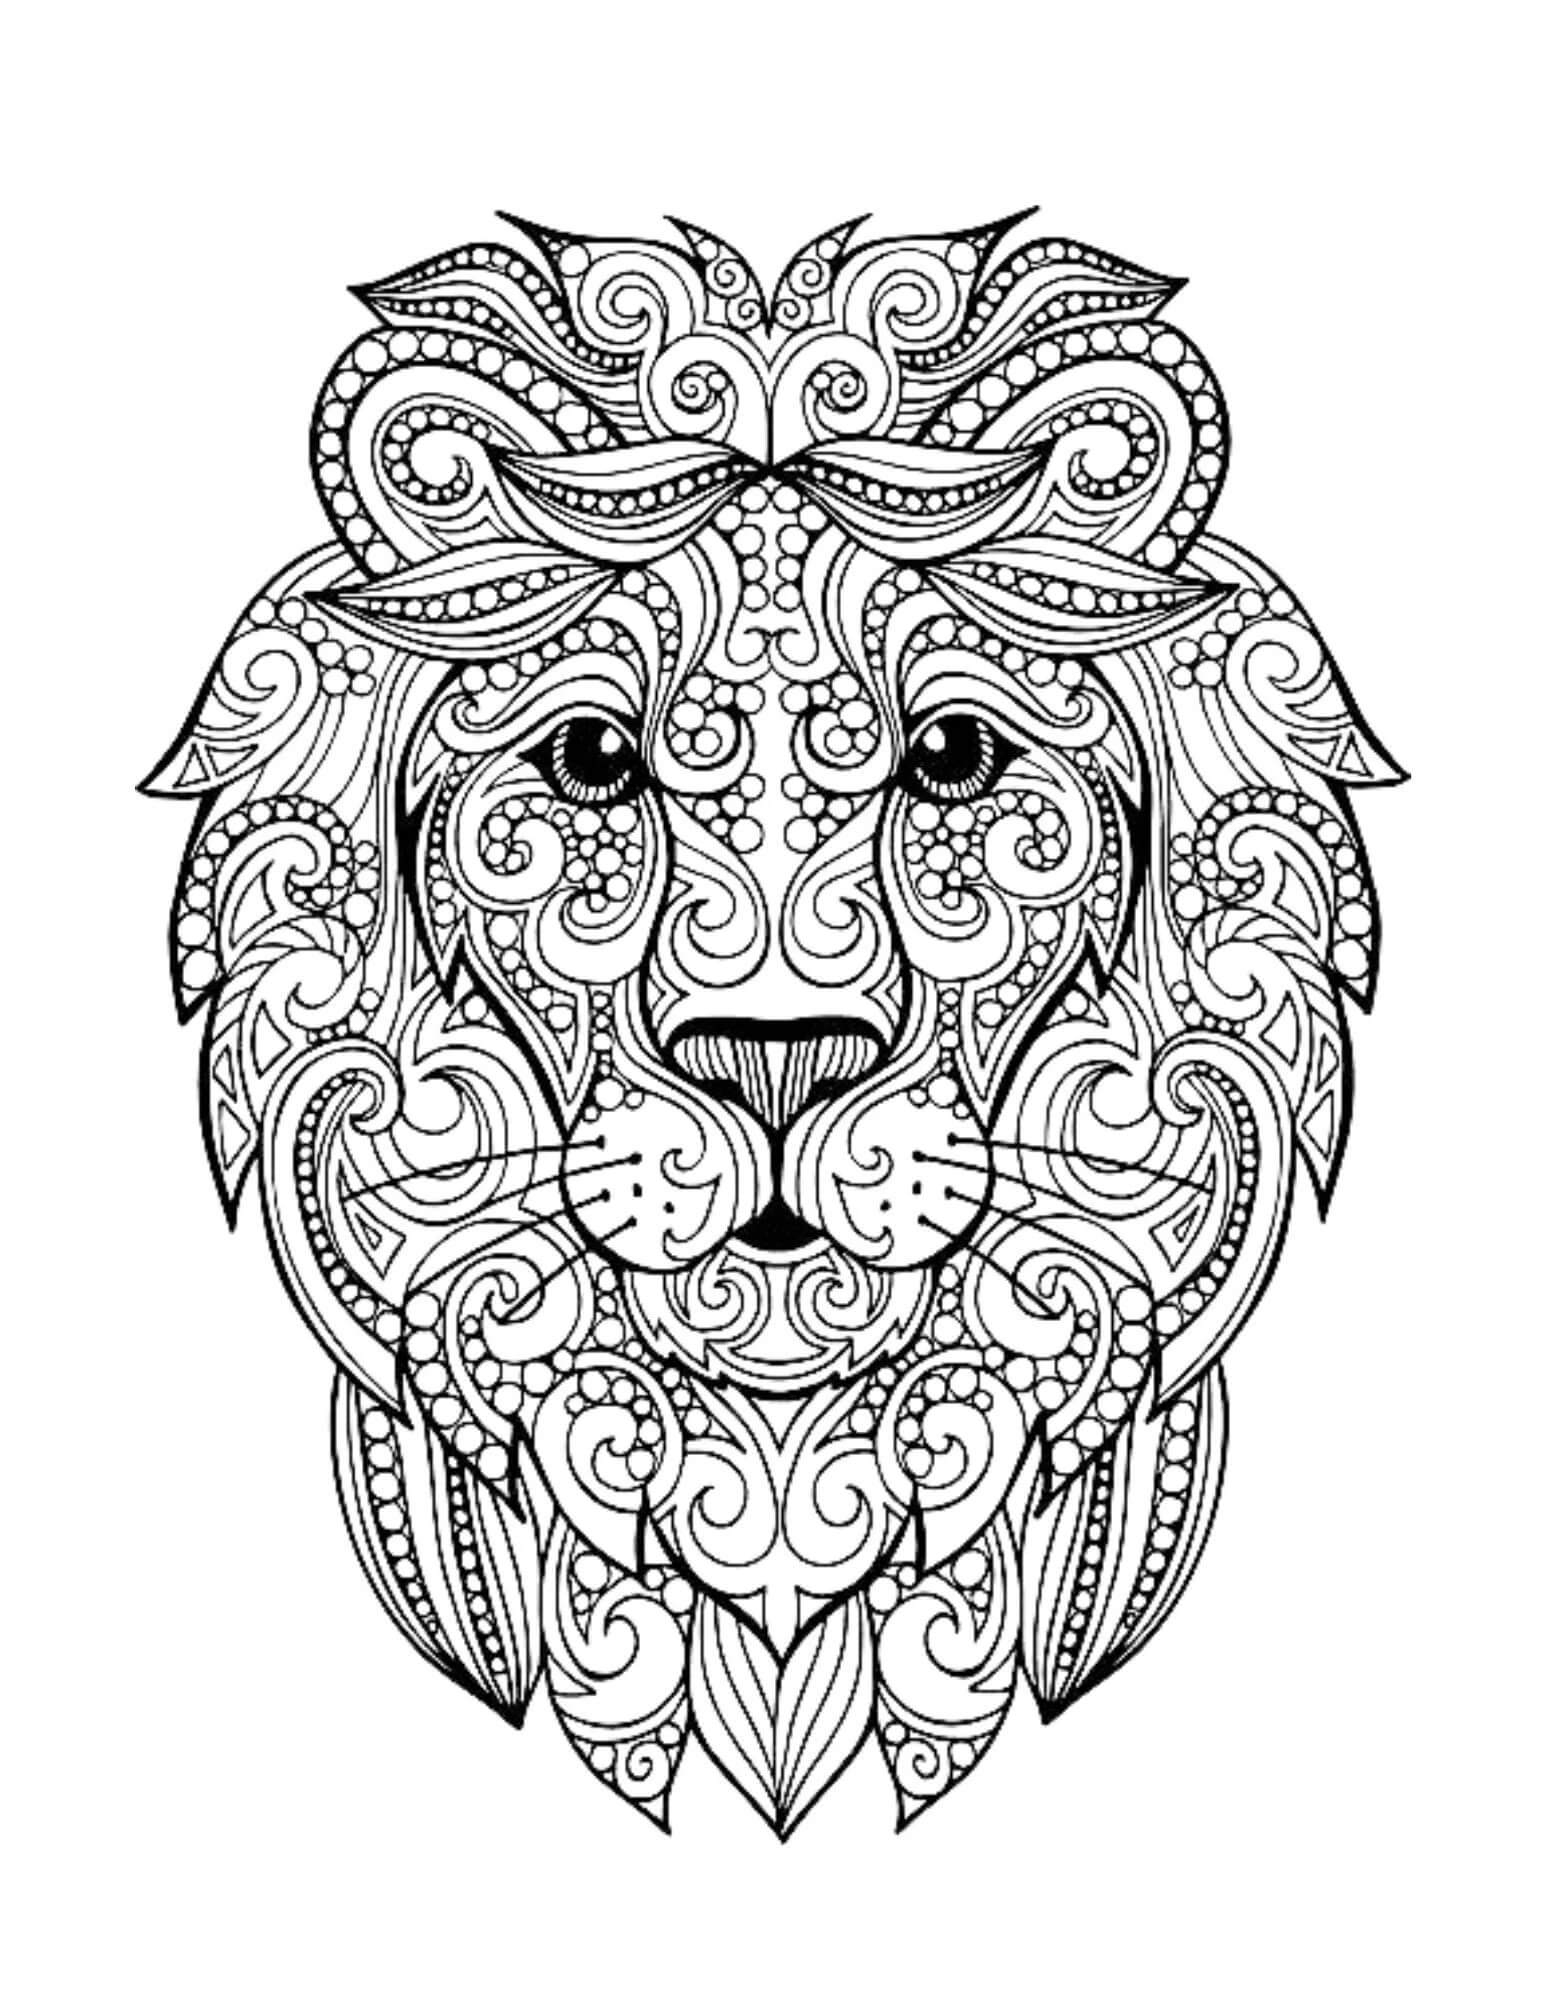 Mandala Lion Face Coloring Page Mandalas